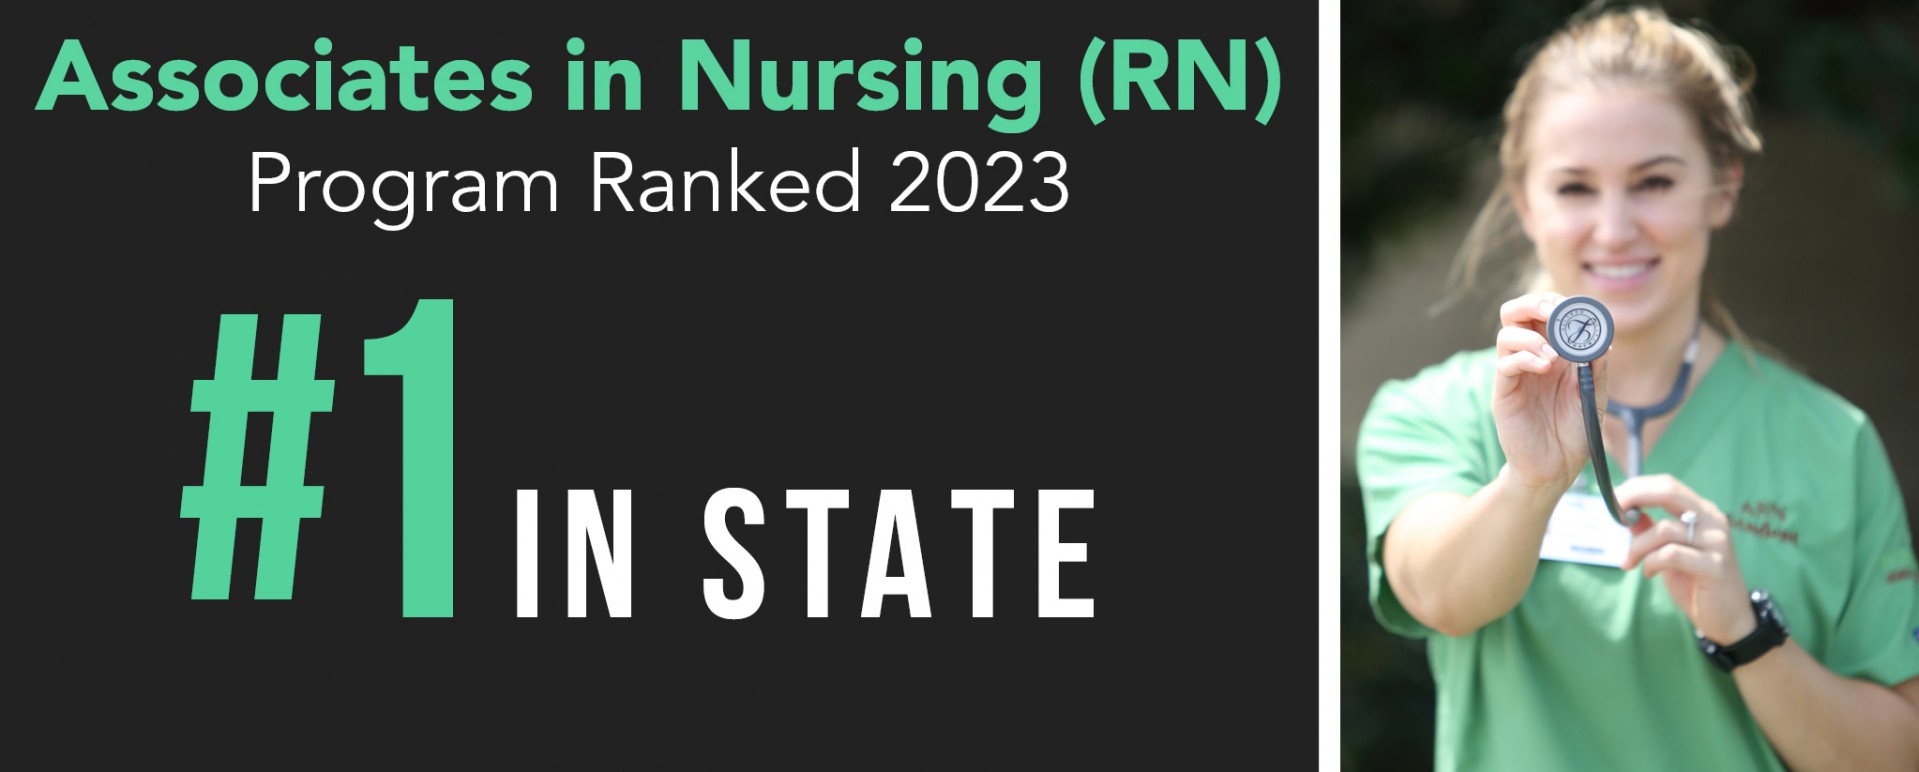 Congratulations to the RN Program!